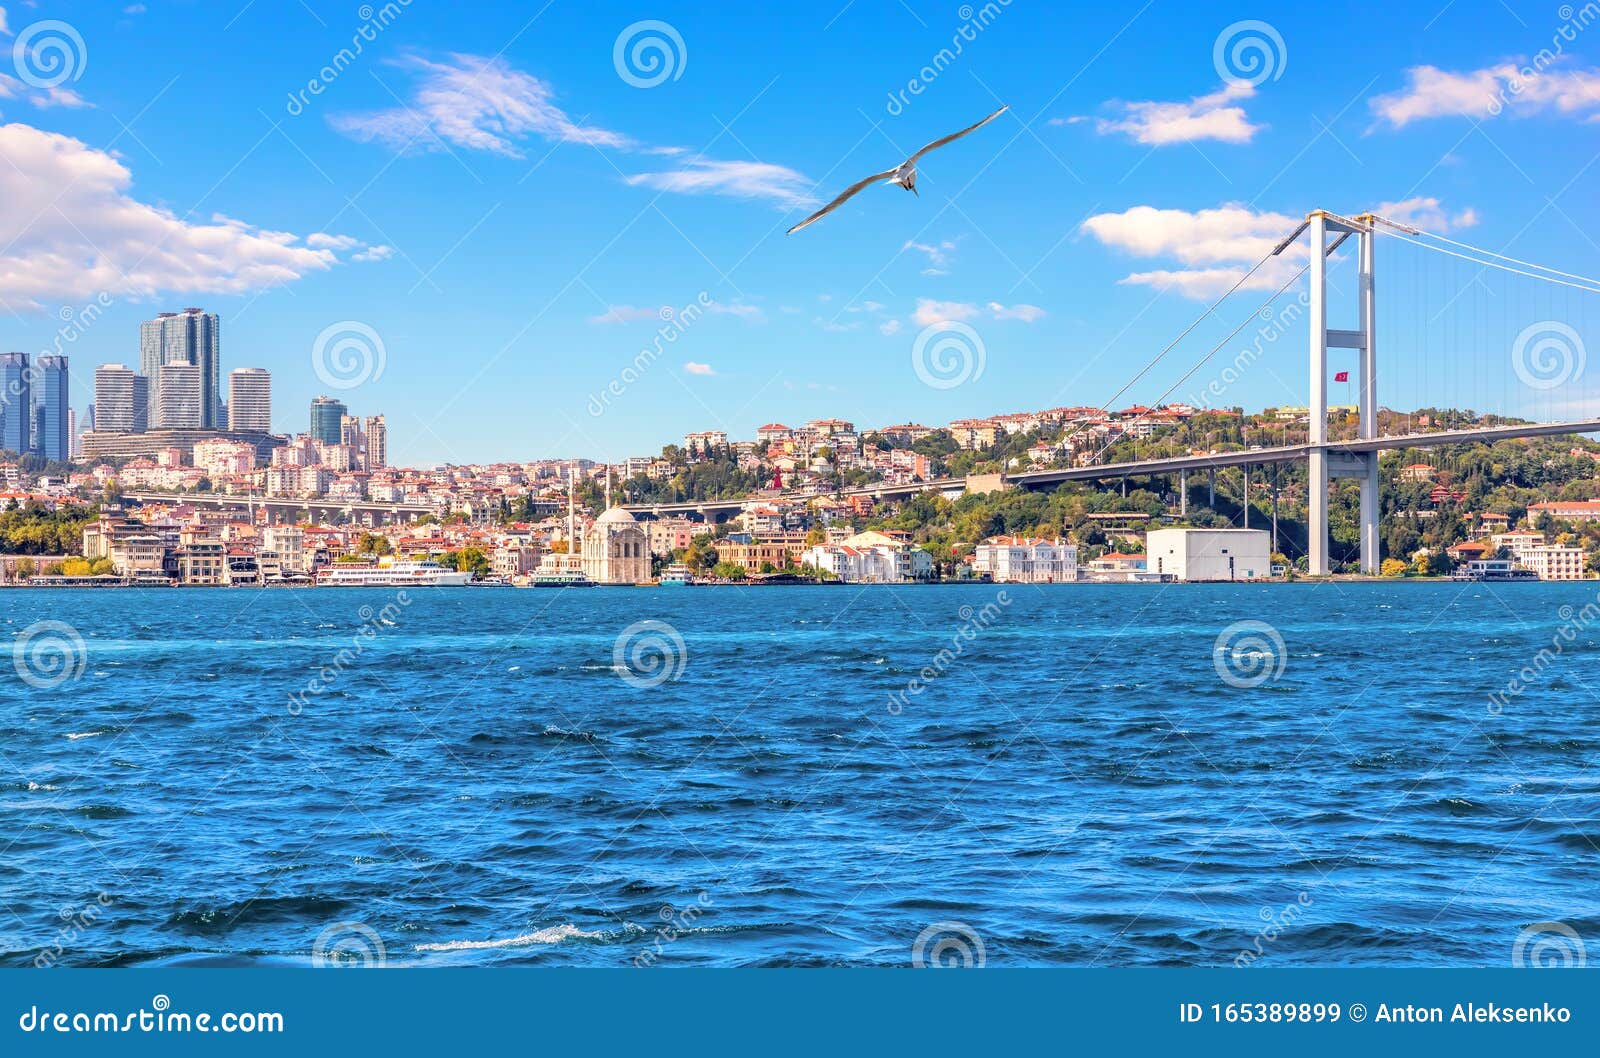 bosphorus bridge and istanbul skyscrappers, beautiful view